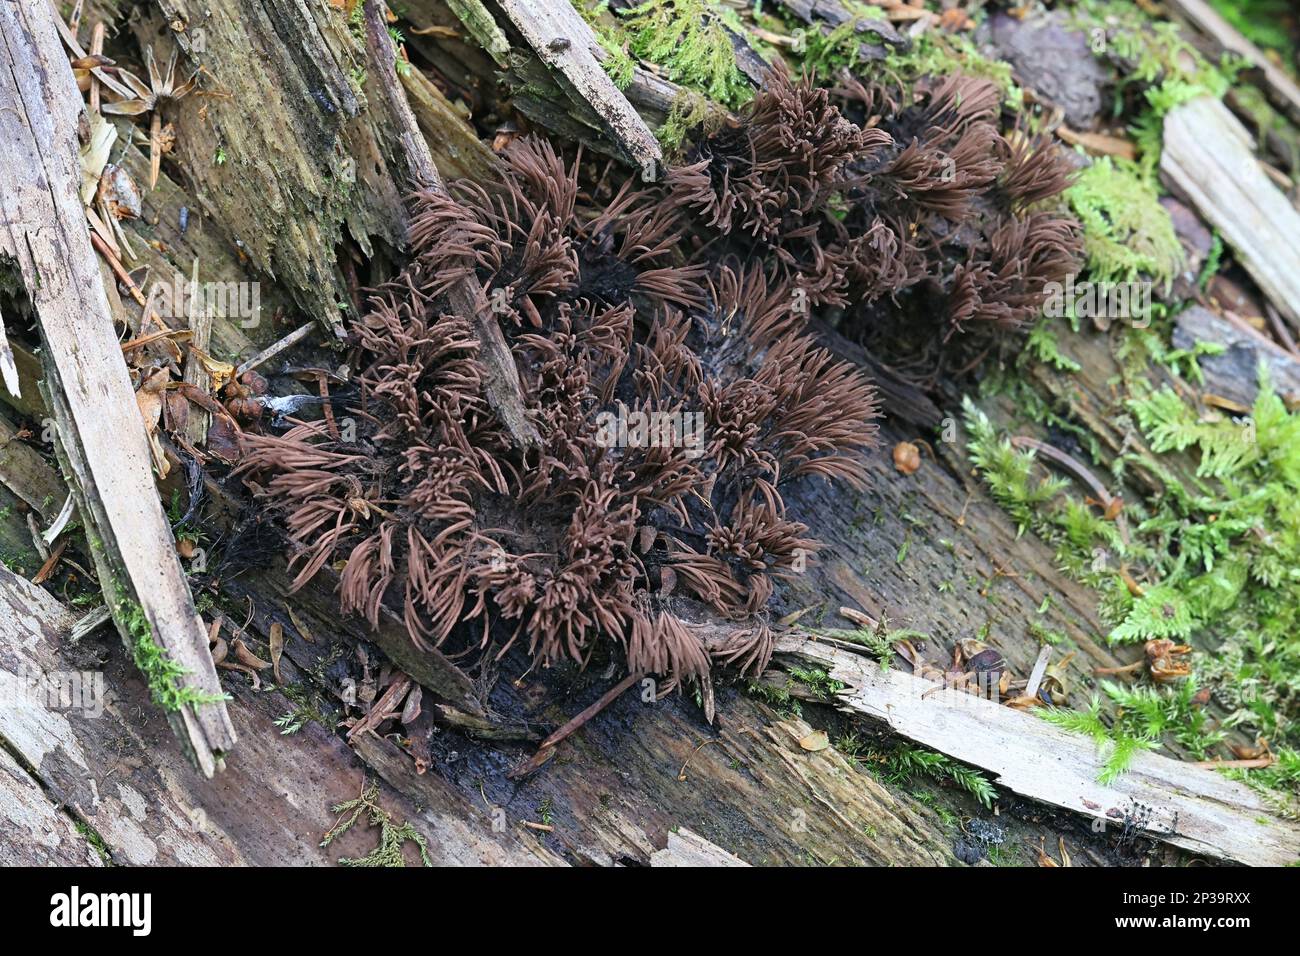 Stemonitis fusca, tube slime mold from Finland, no common English name Stock Photo